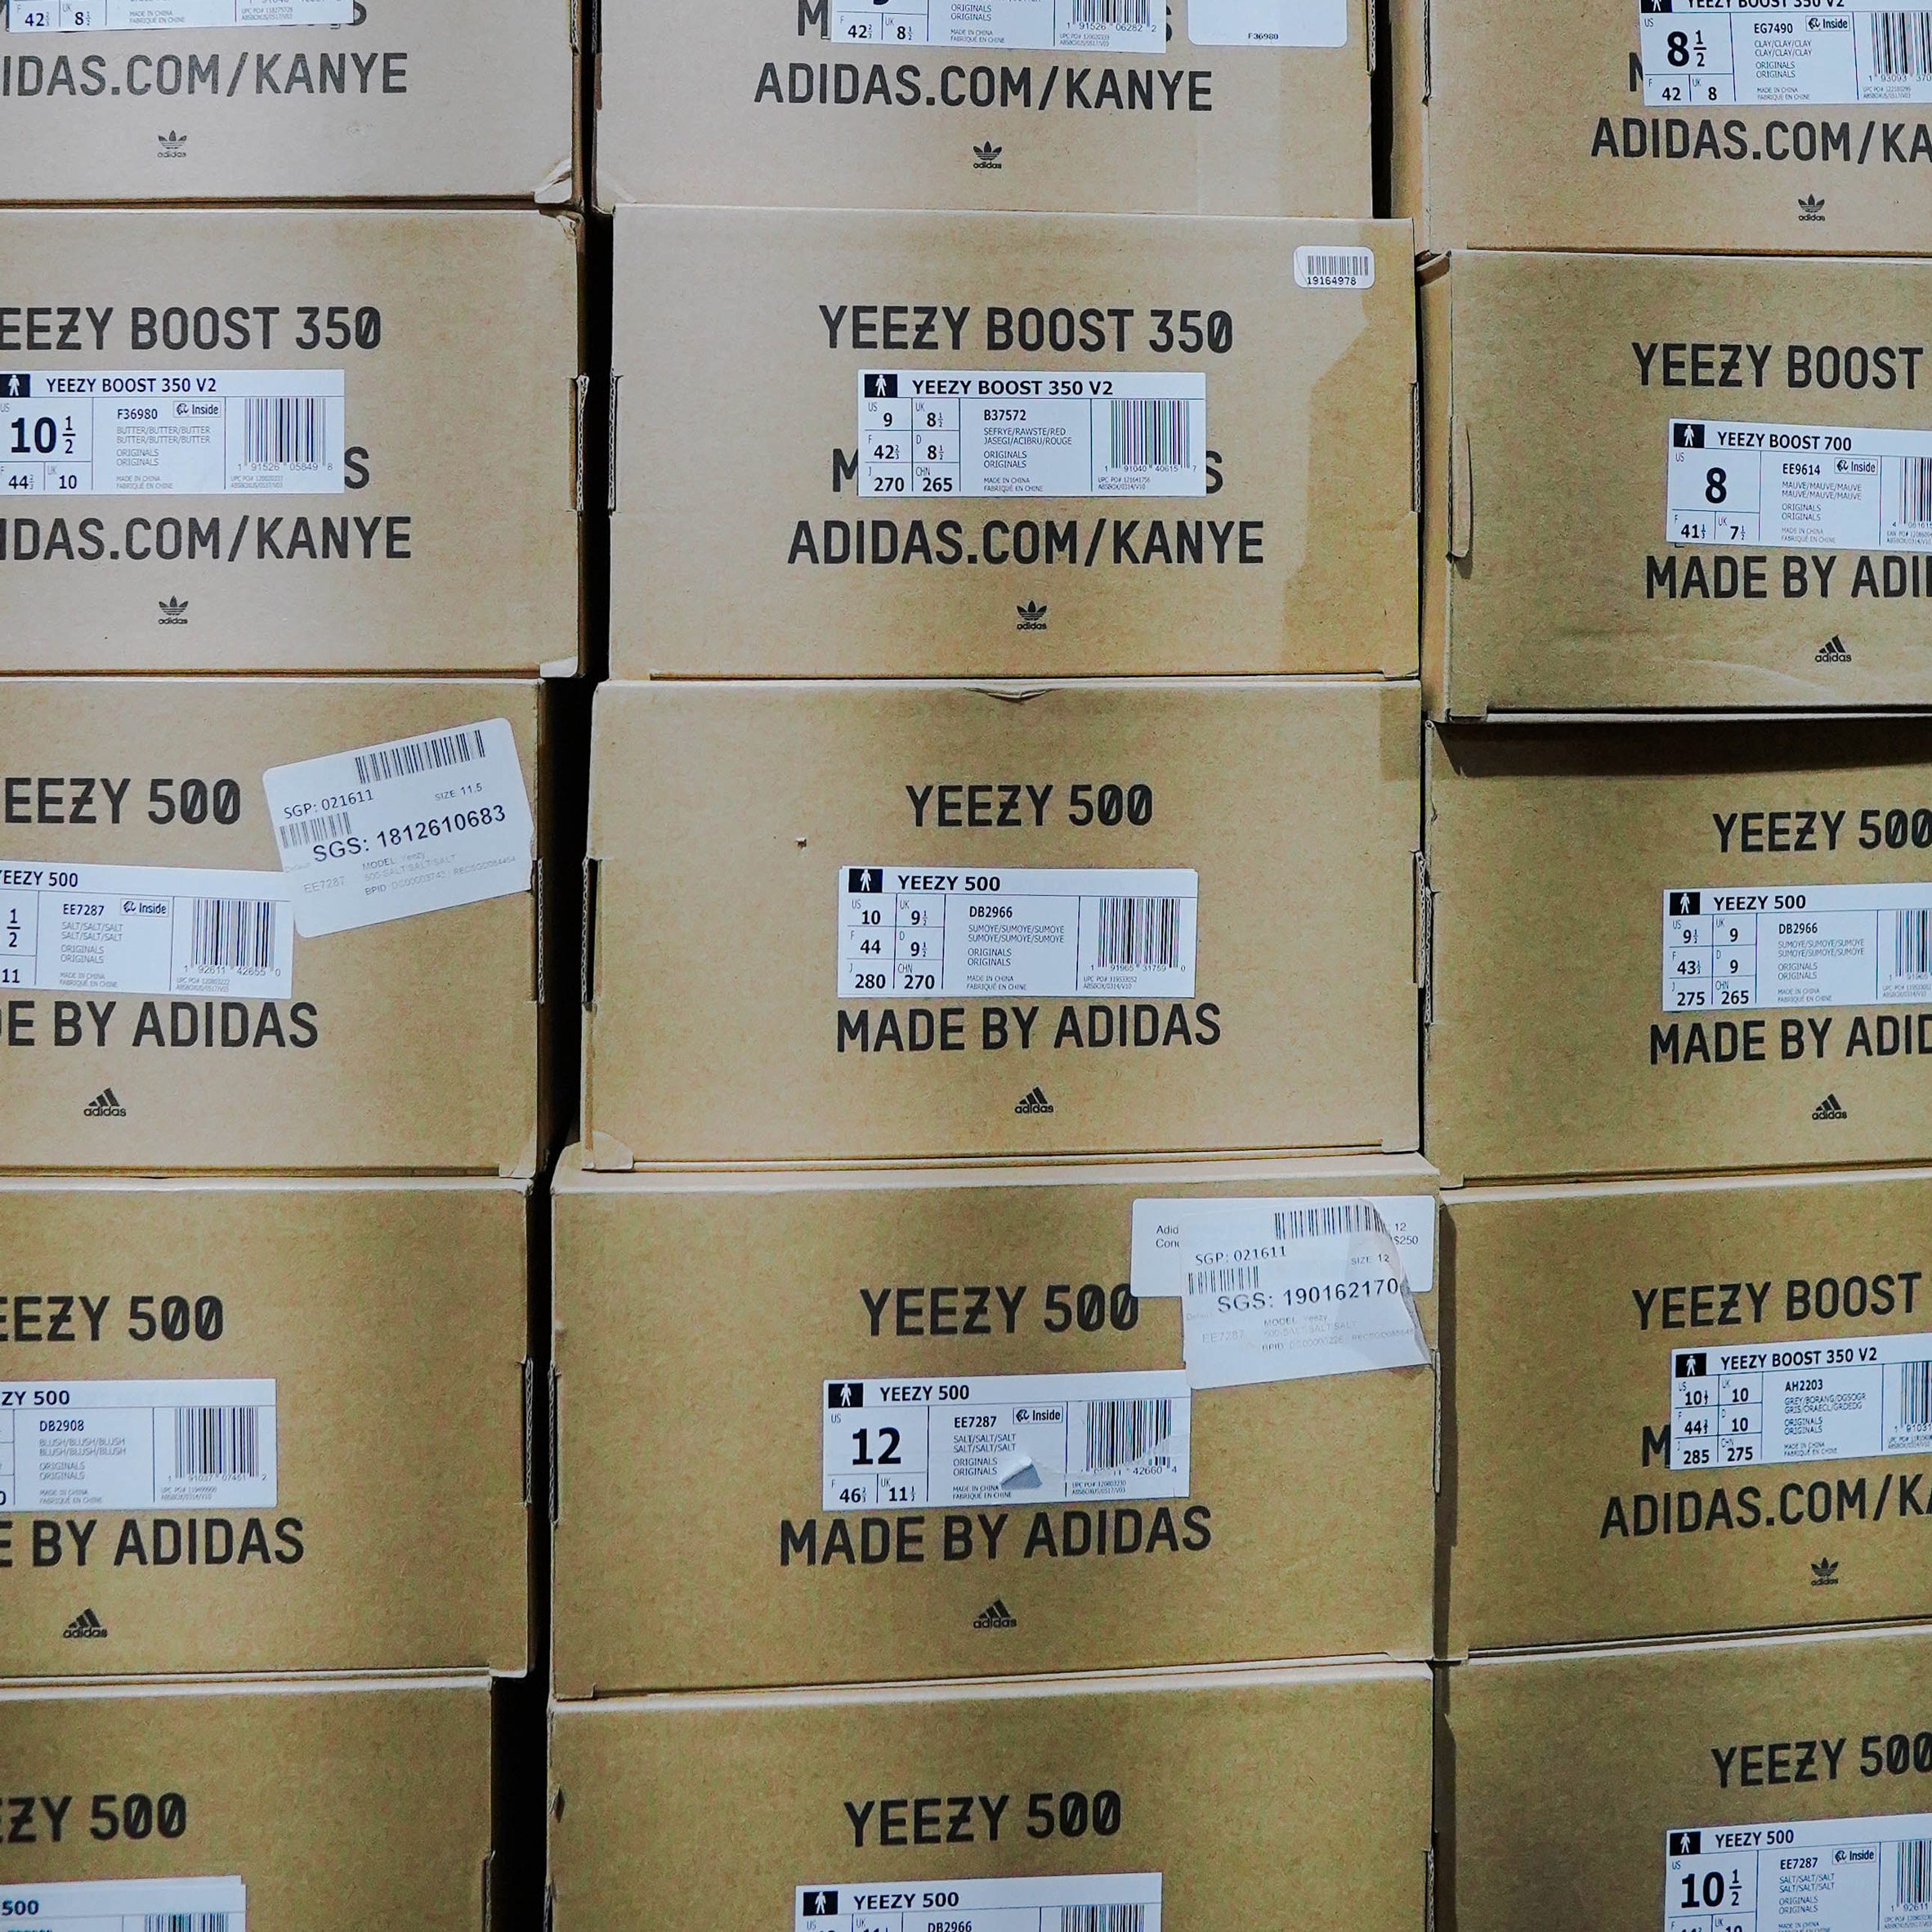 Adidas's Sale of Yeezy Sneakers Brings in 400 Million Euros - The